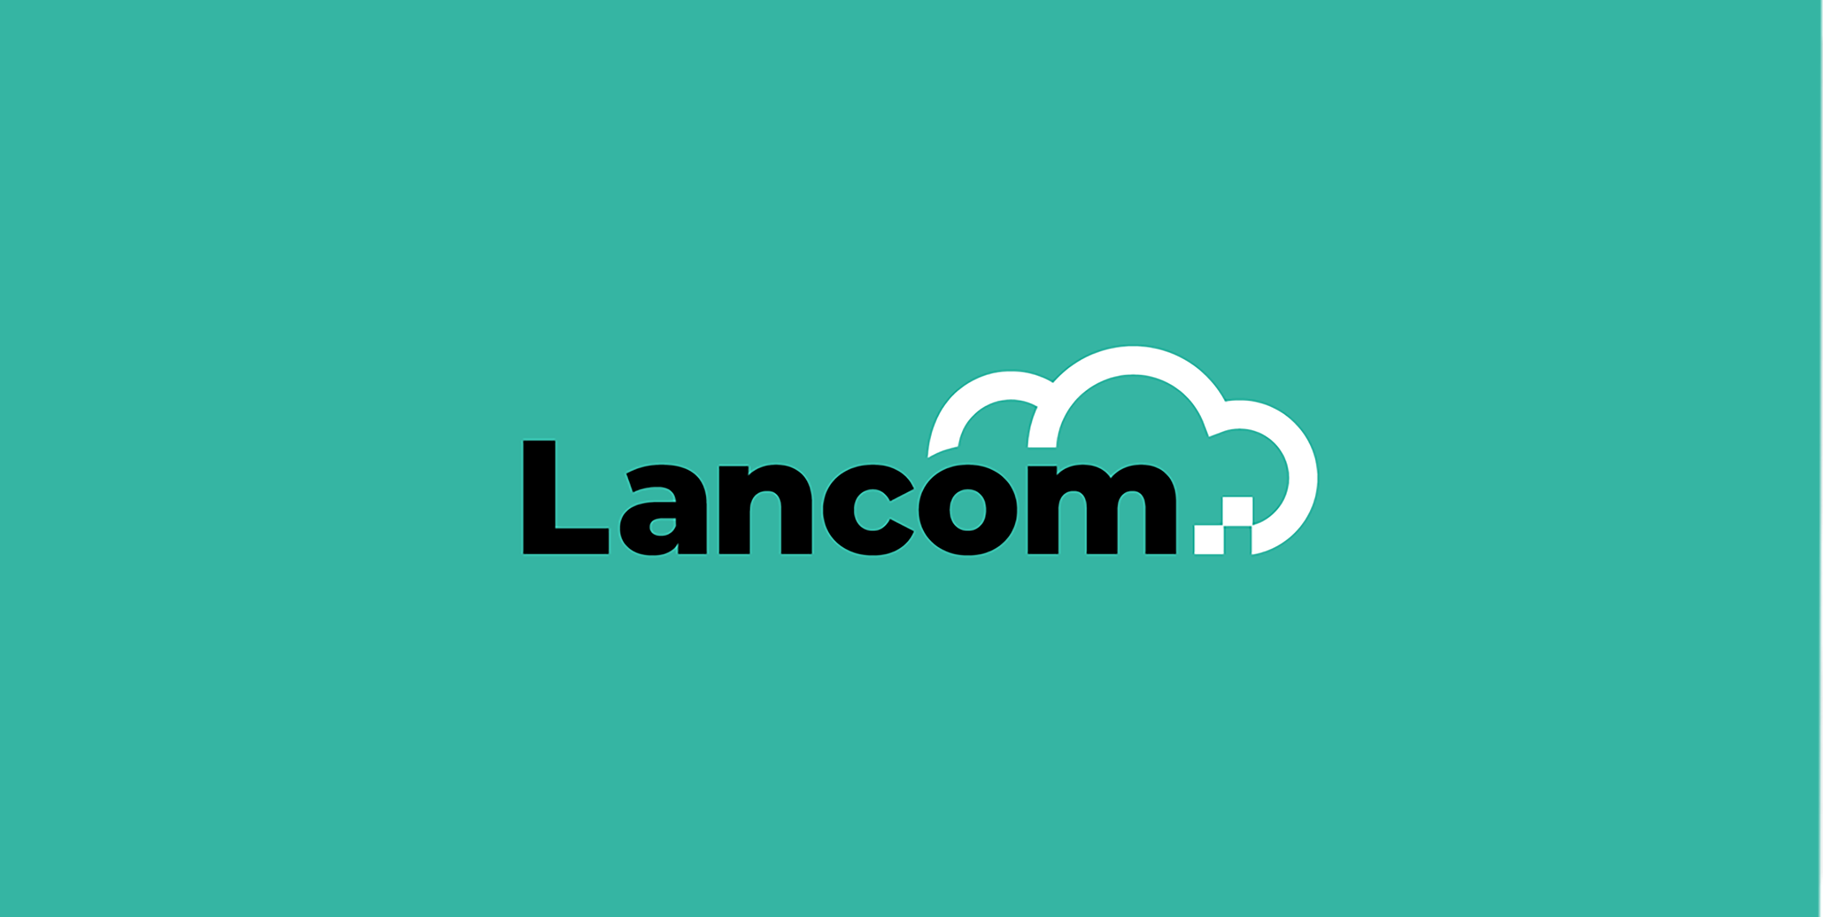 Lancom Communications